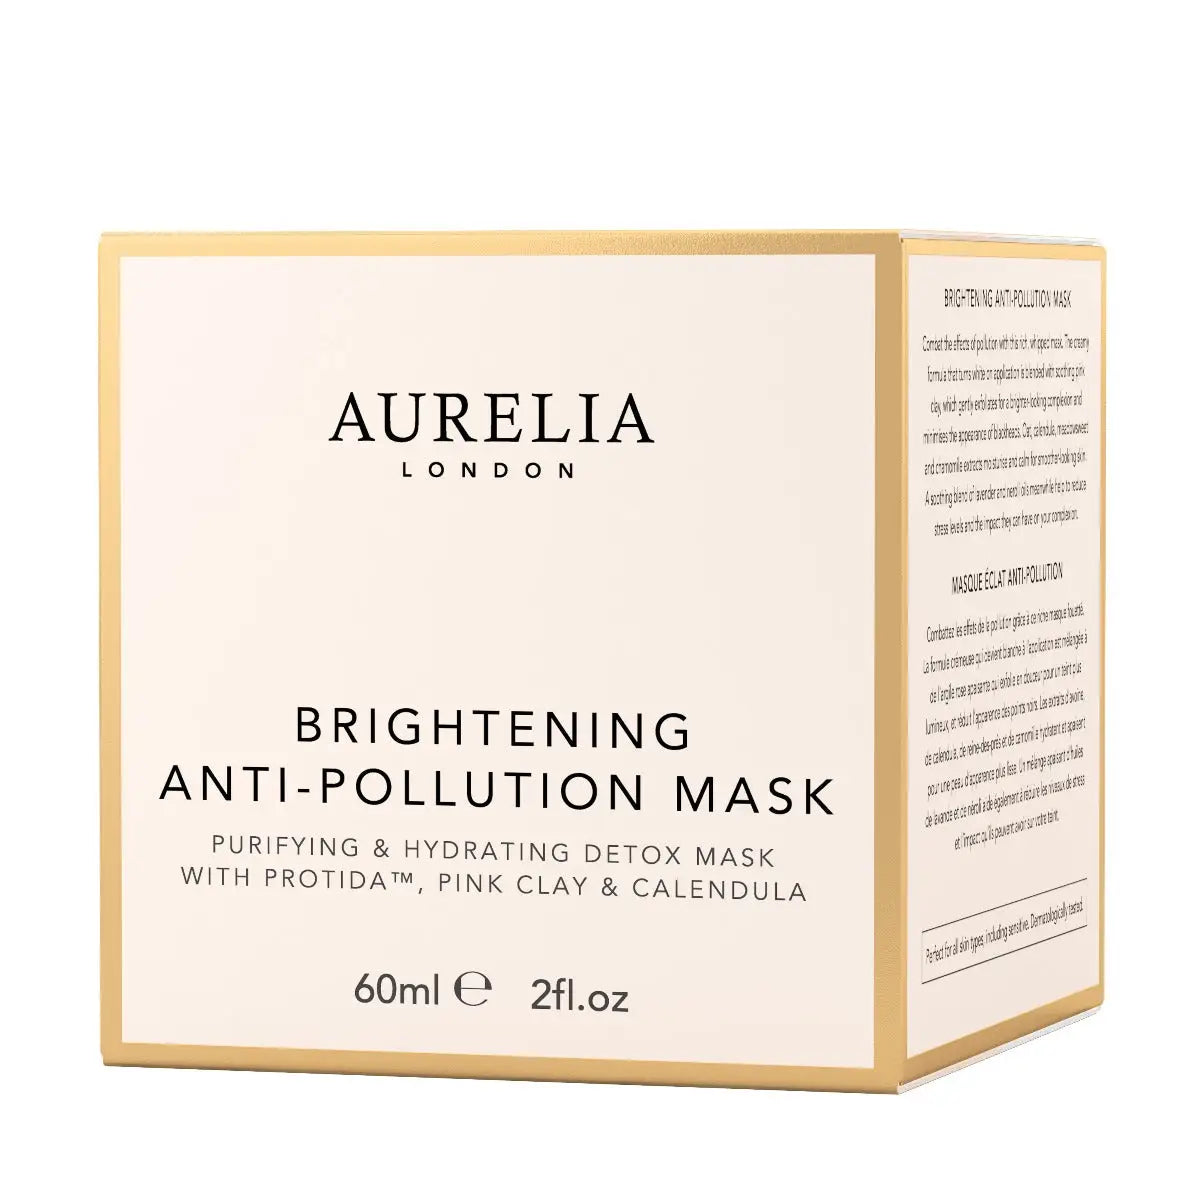 Aurelia London Brightening Anti-Pollution Mask 60ml - Free 